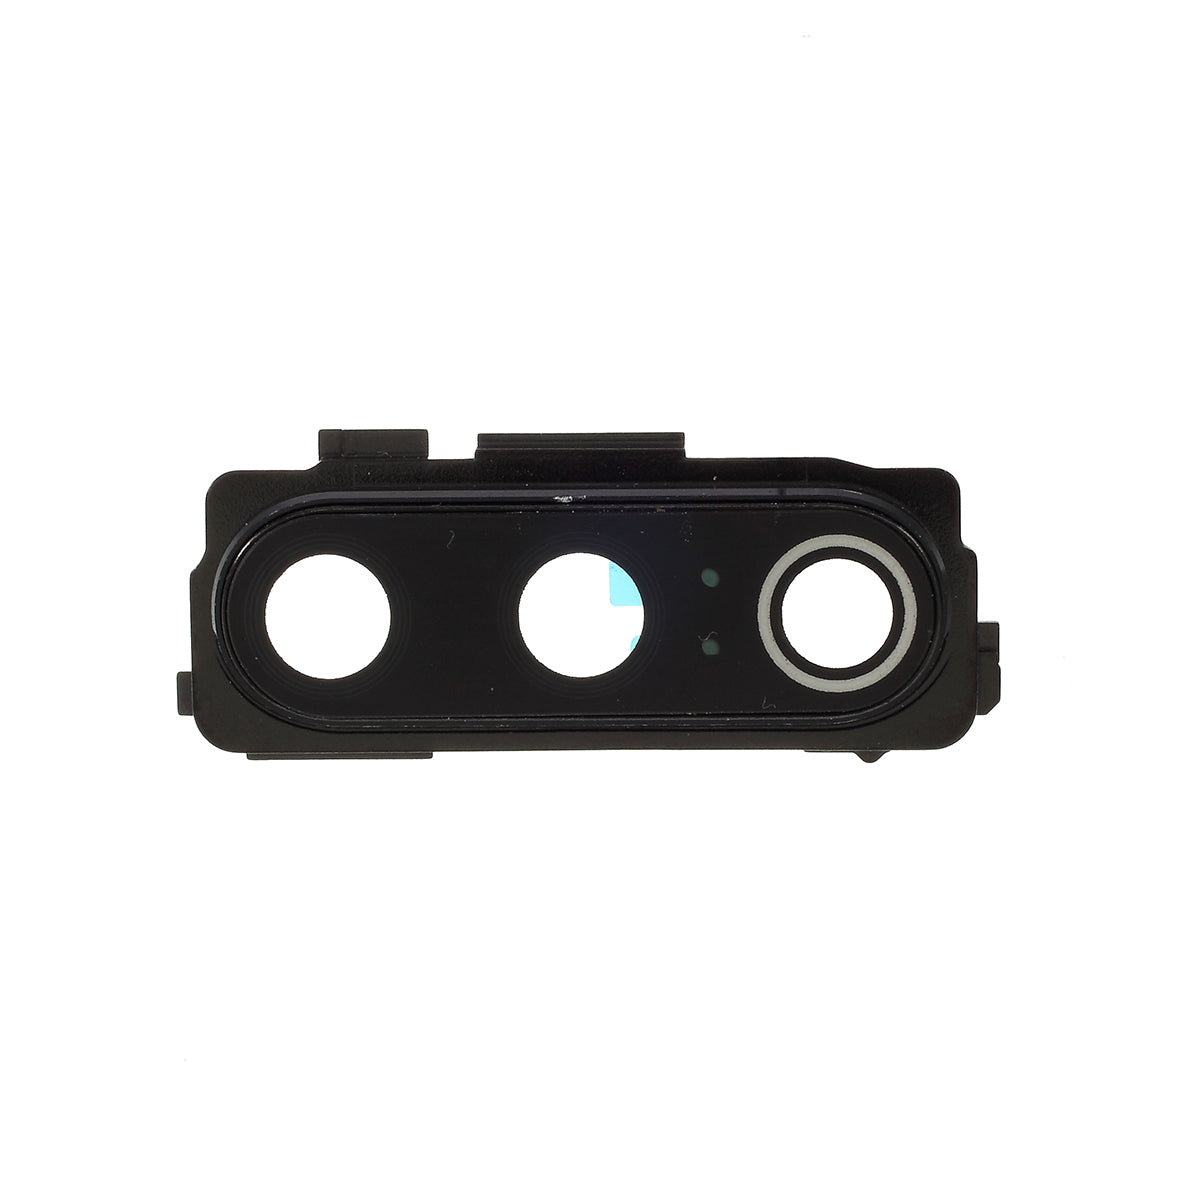 OEM Camera Lens Holder Cover for Xiaomi Mi 9 - Black